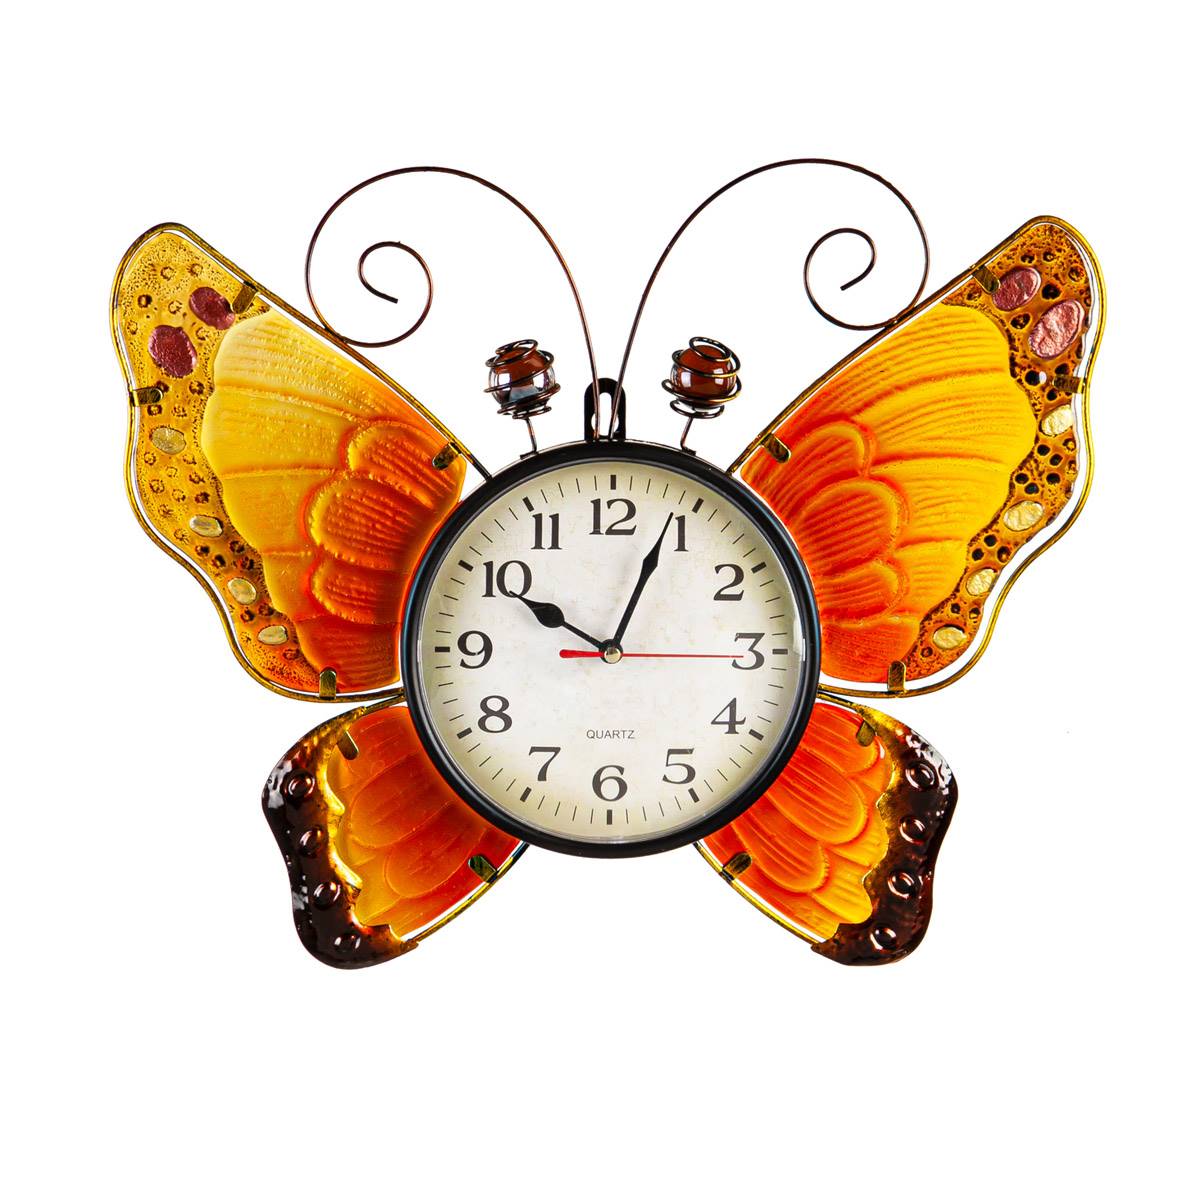 Evergreen Butterfly Metal & Glass Shaped Wall Clock